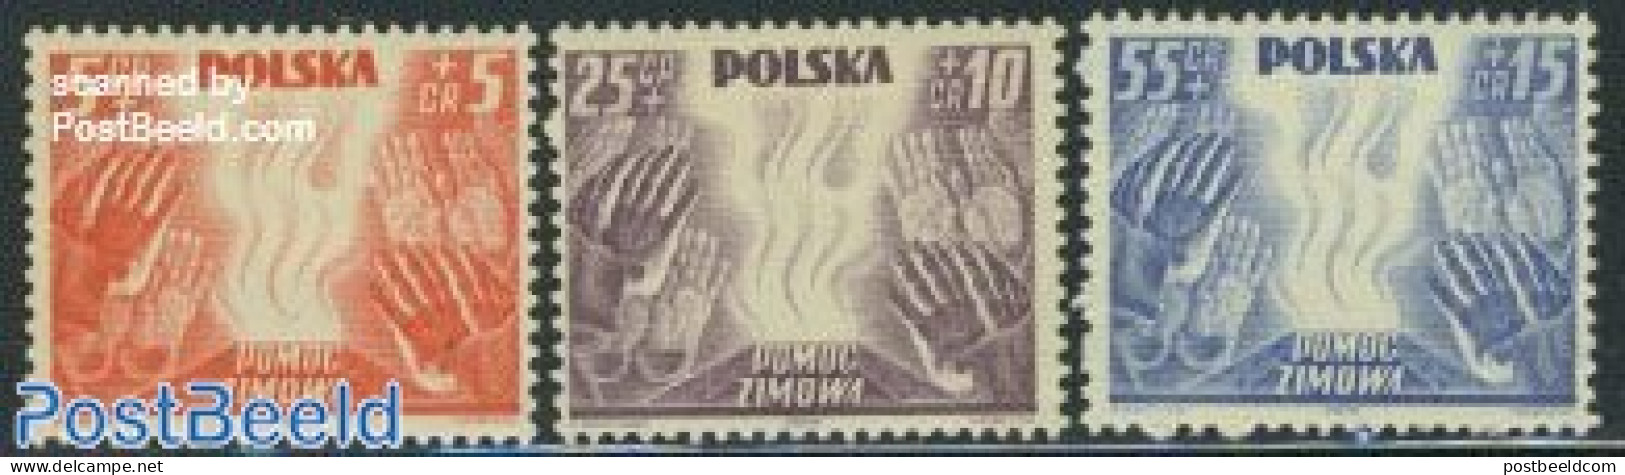 Poland 1938 Winter Aid 3v, Unused (hinged) - Neufs